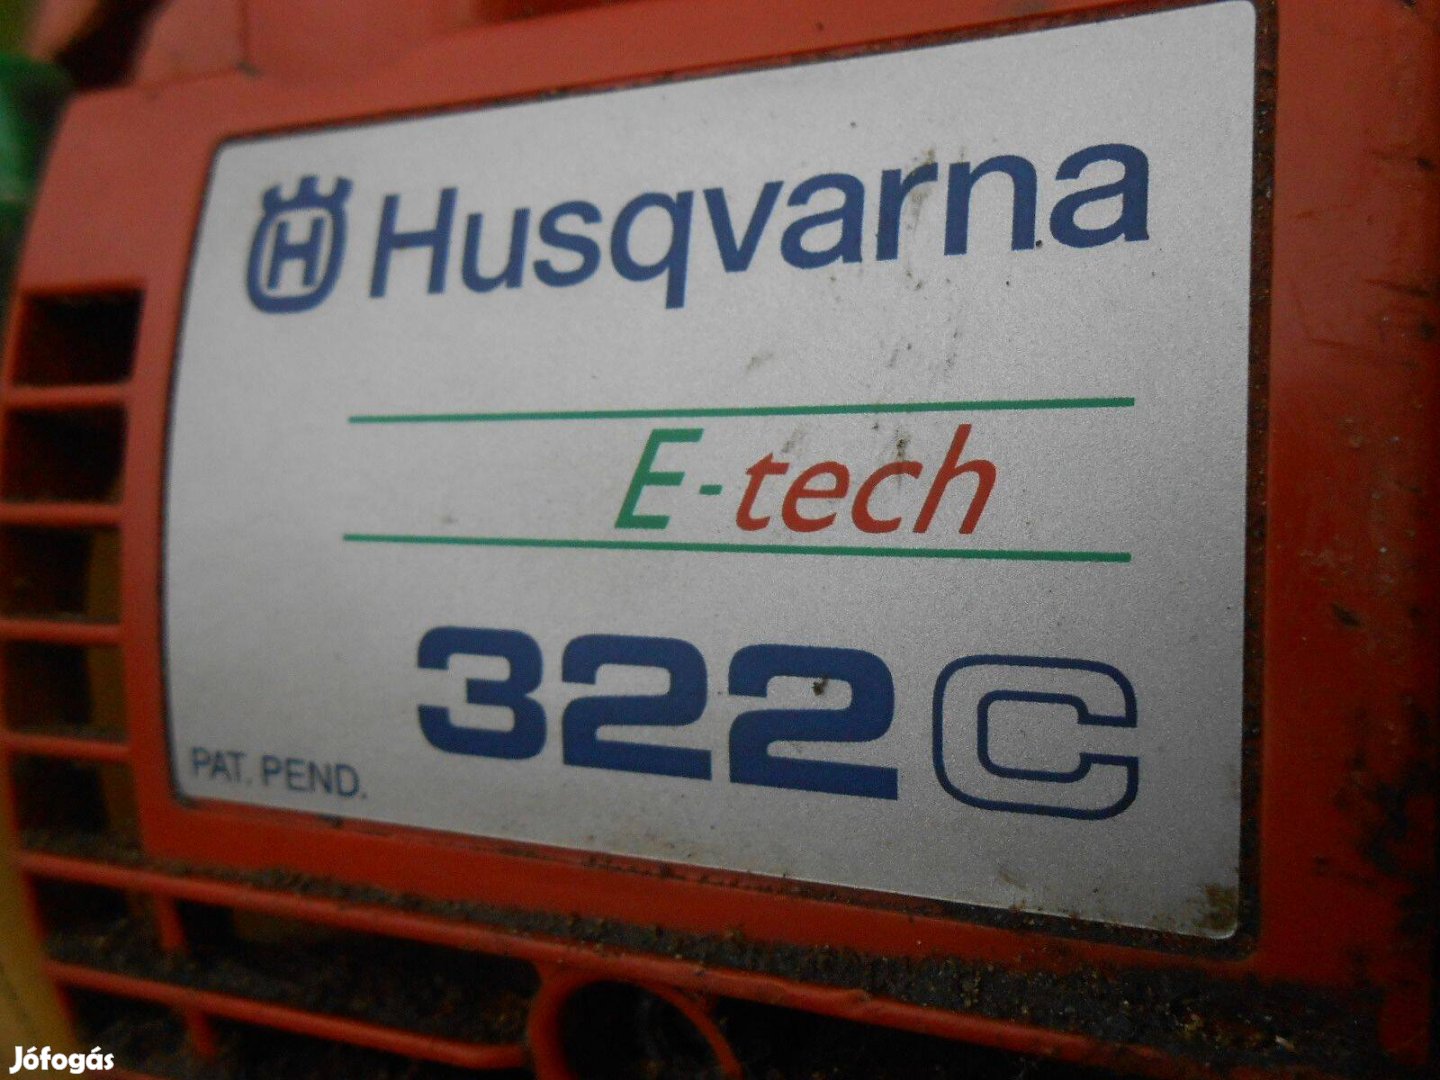 Husqvarna E-Tech 322 C tipusú, damilos fűkasza ,nagyon olcsón